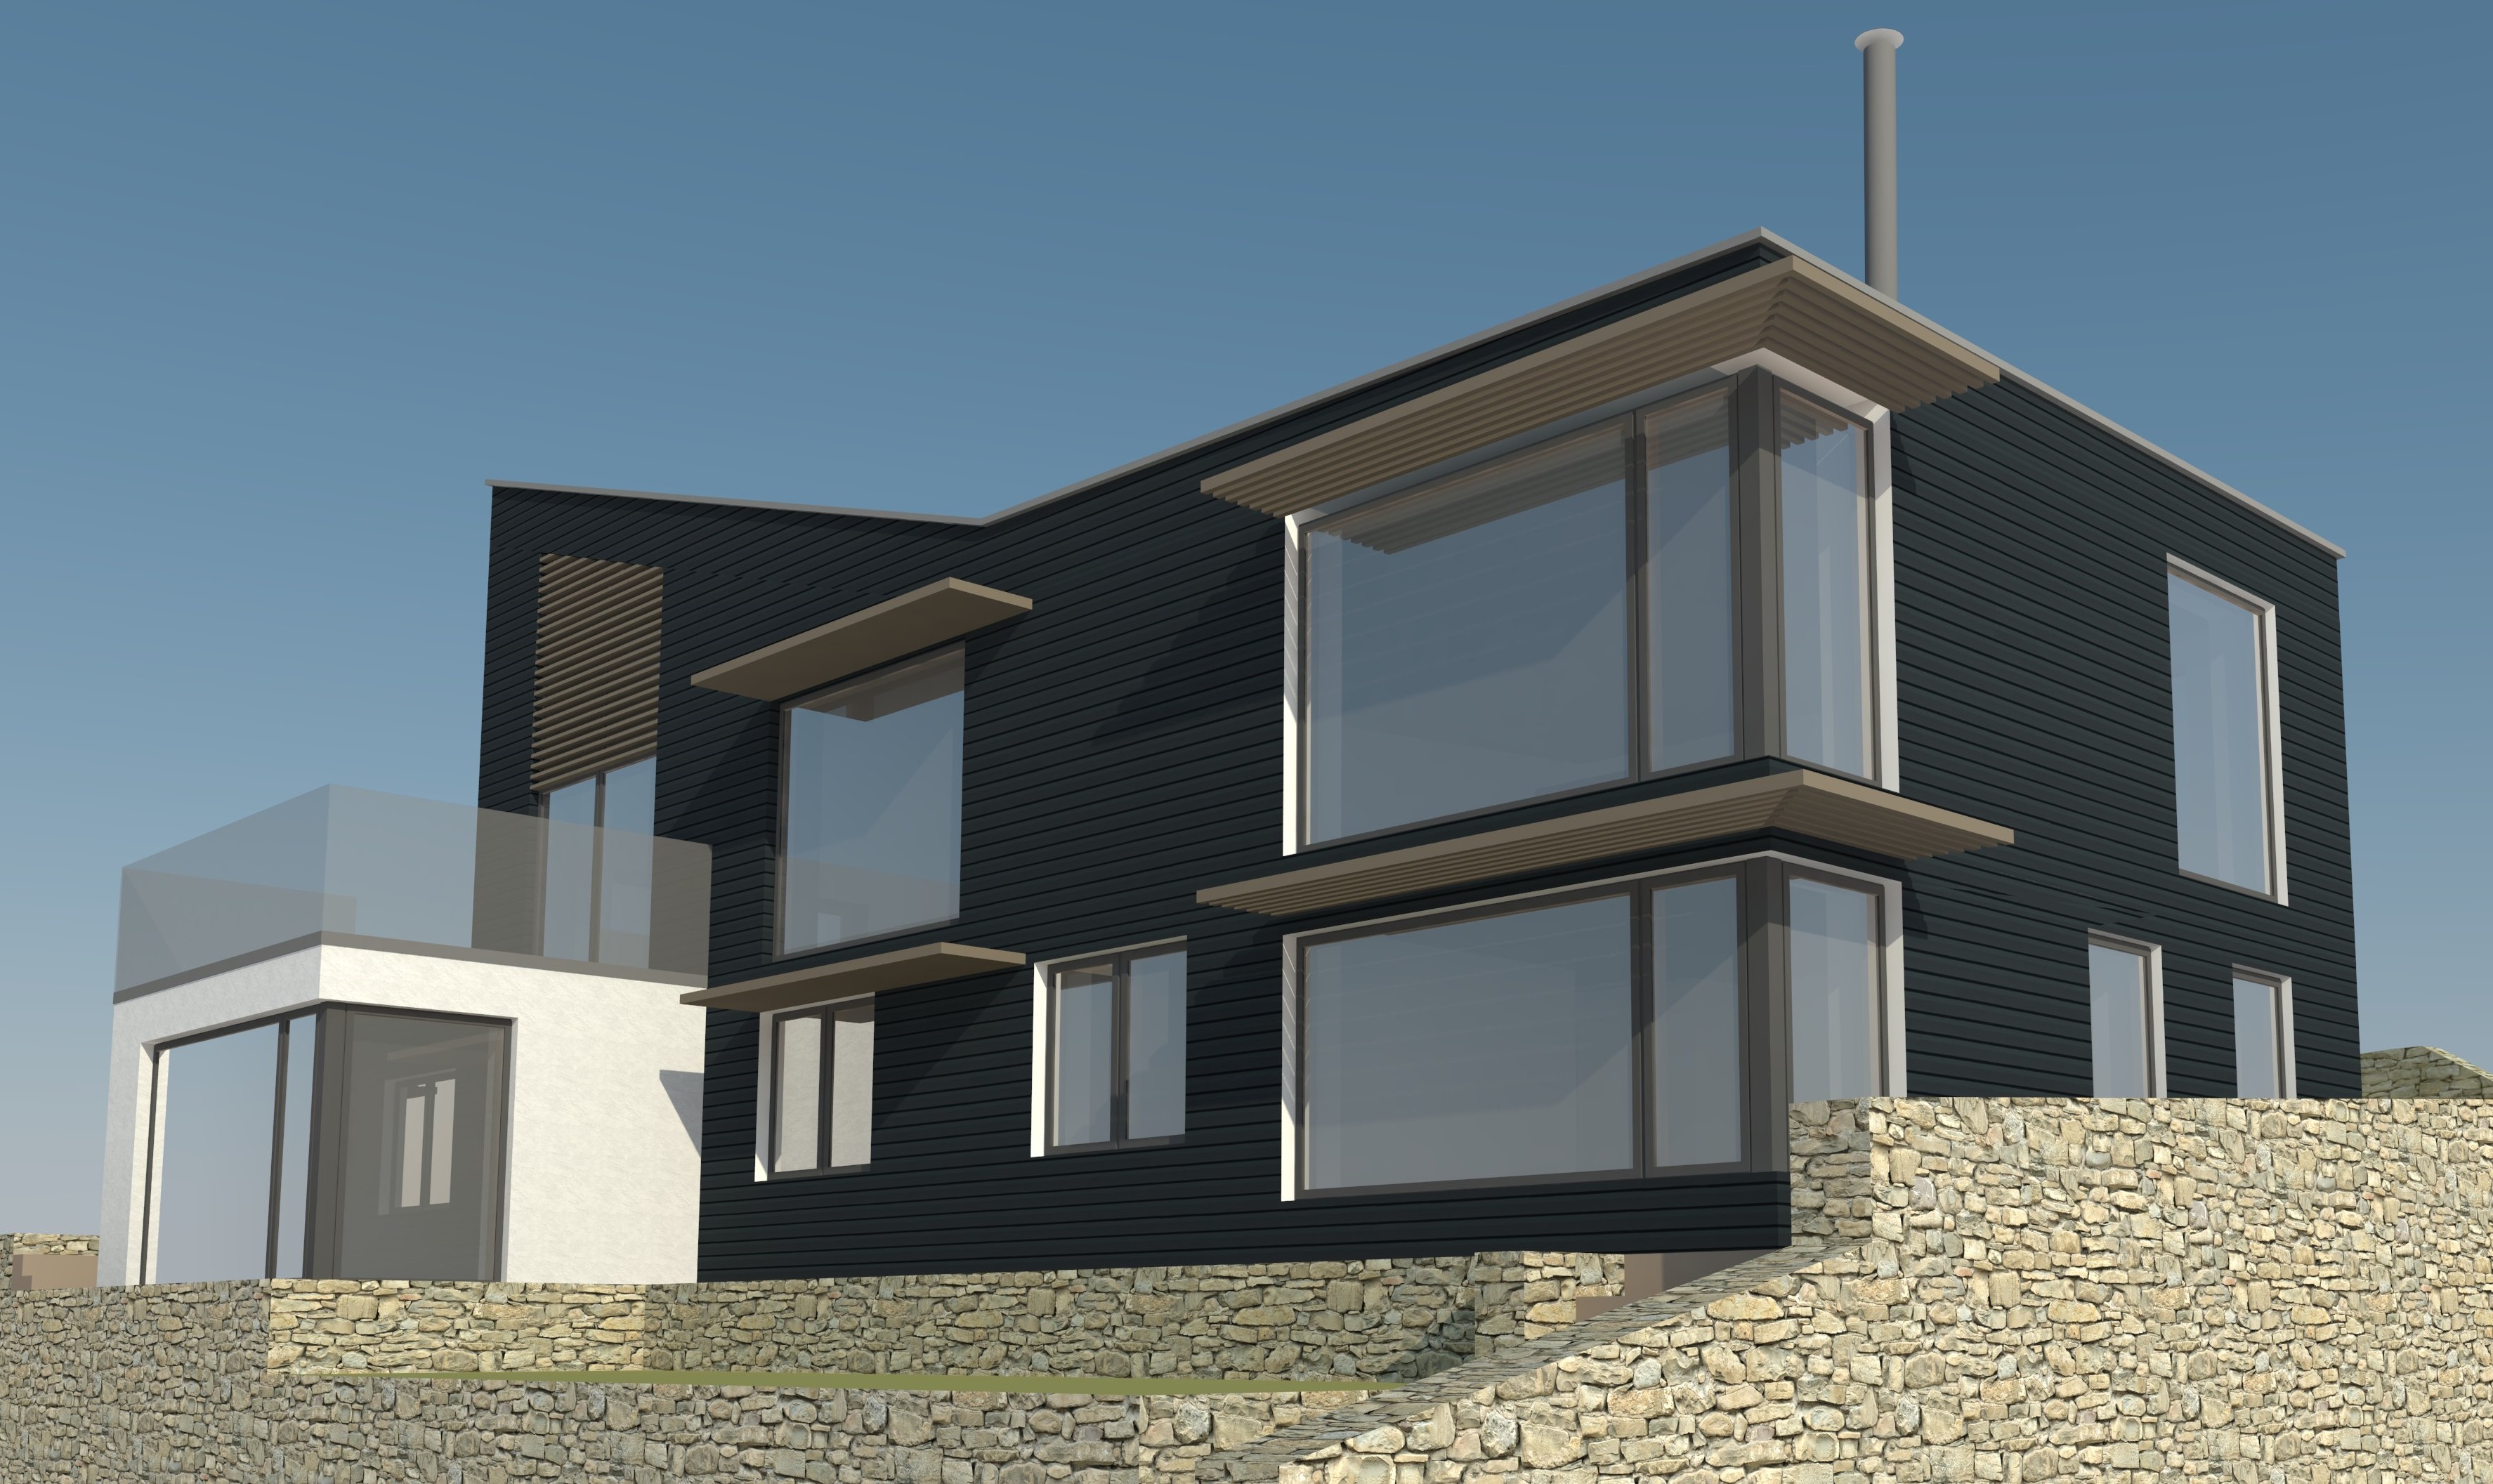 Photoshop image of proposed house